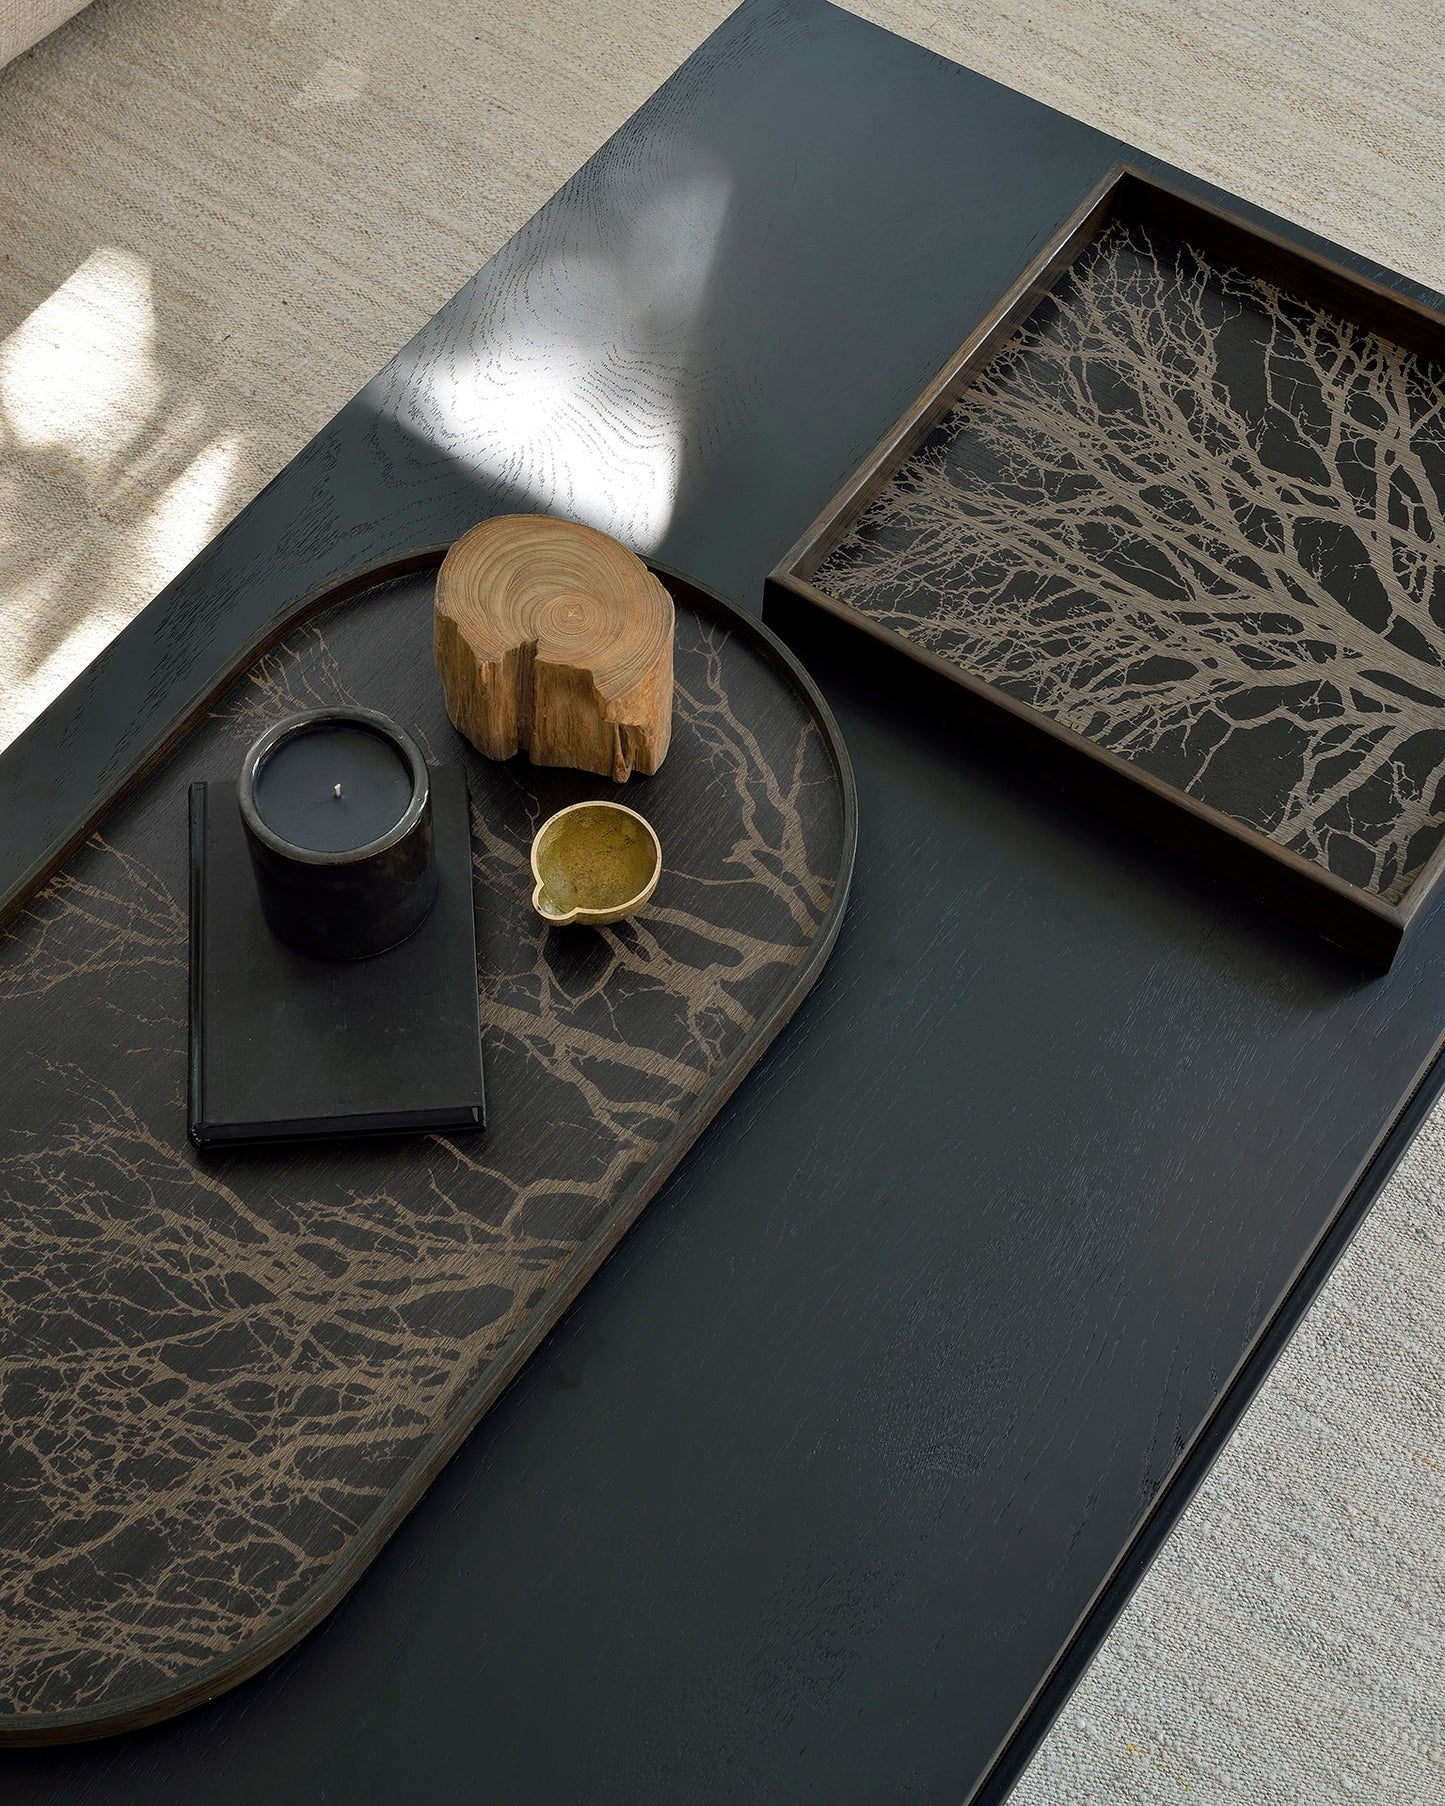 Black Tree wooden tray - Oblong